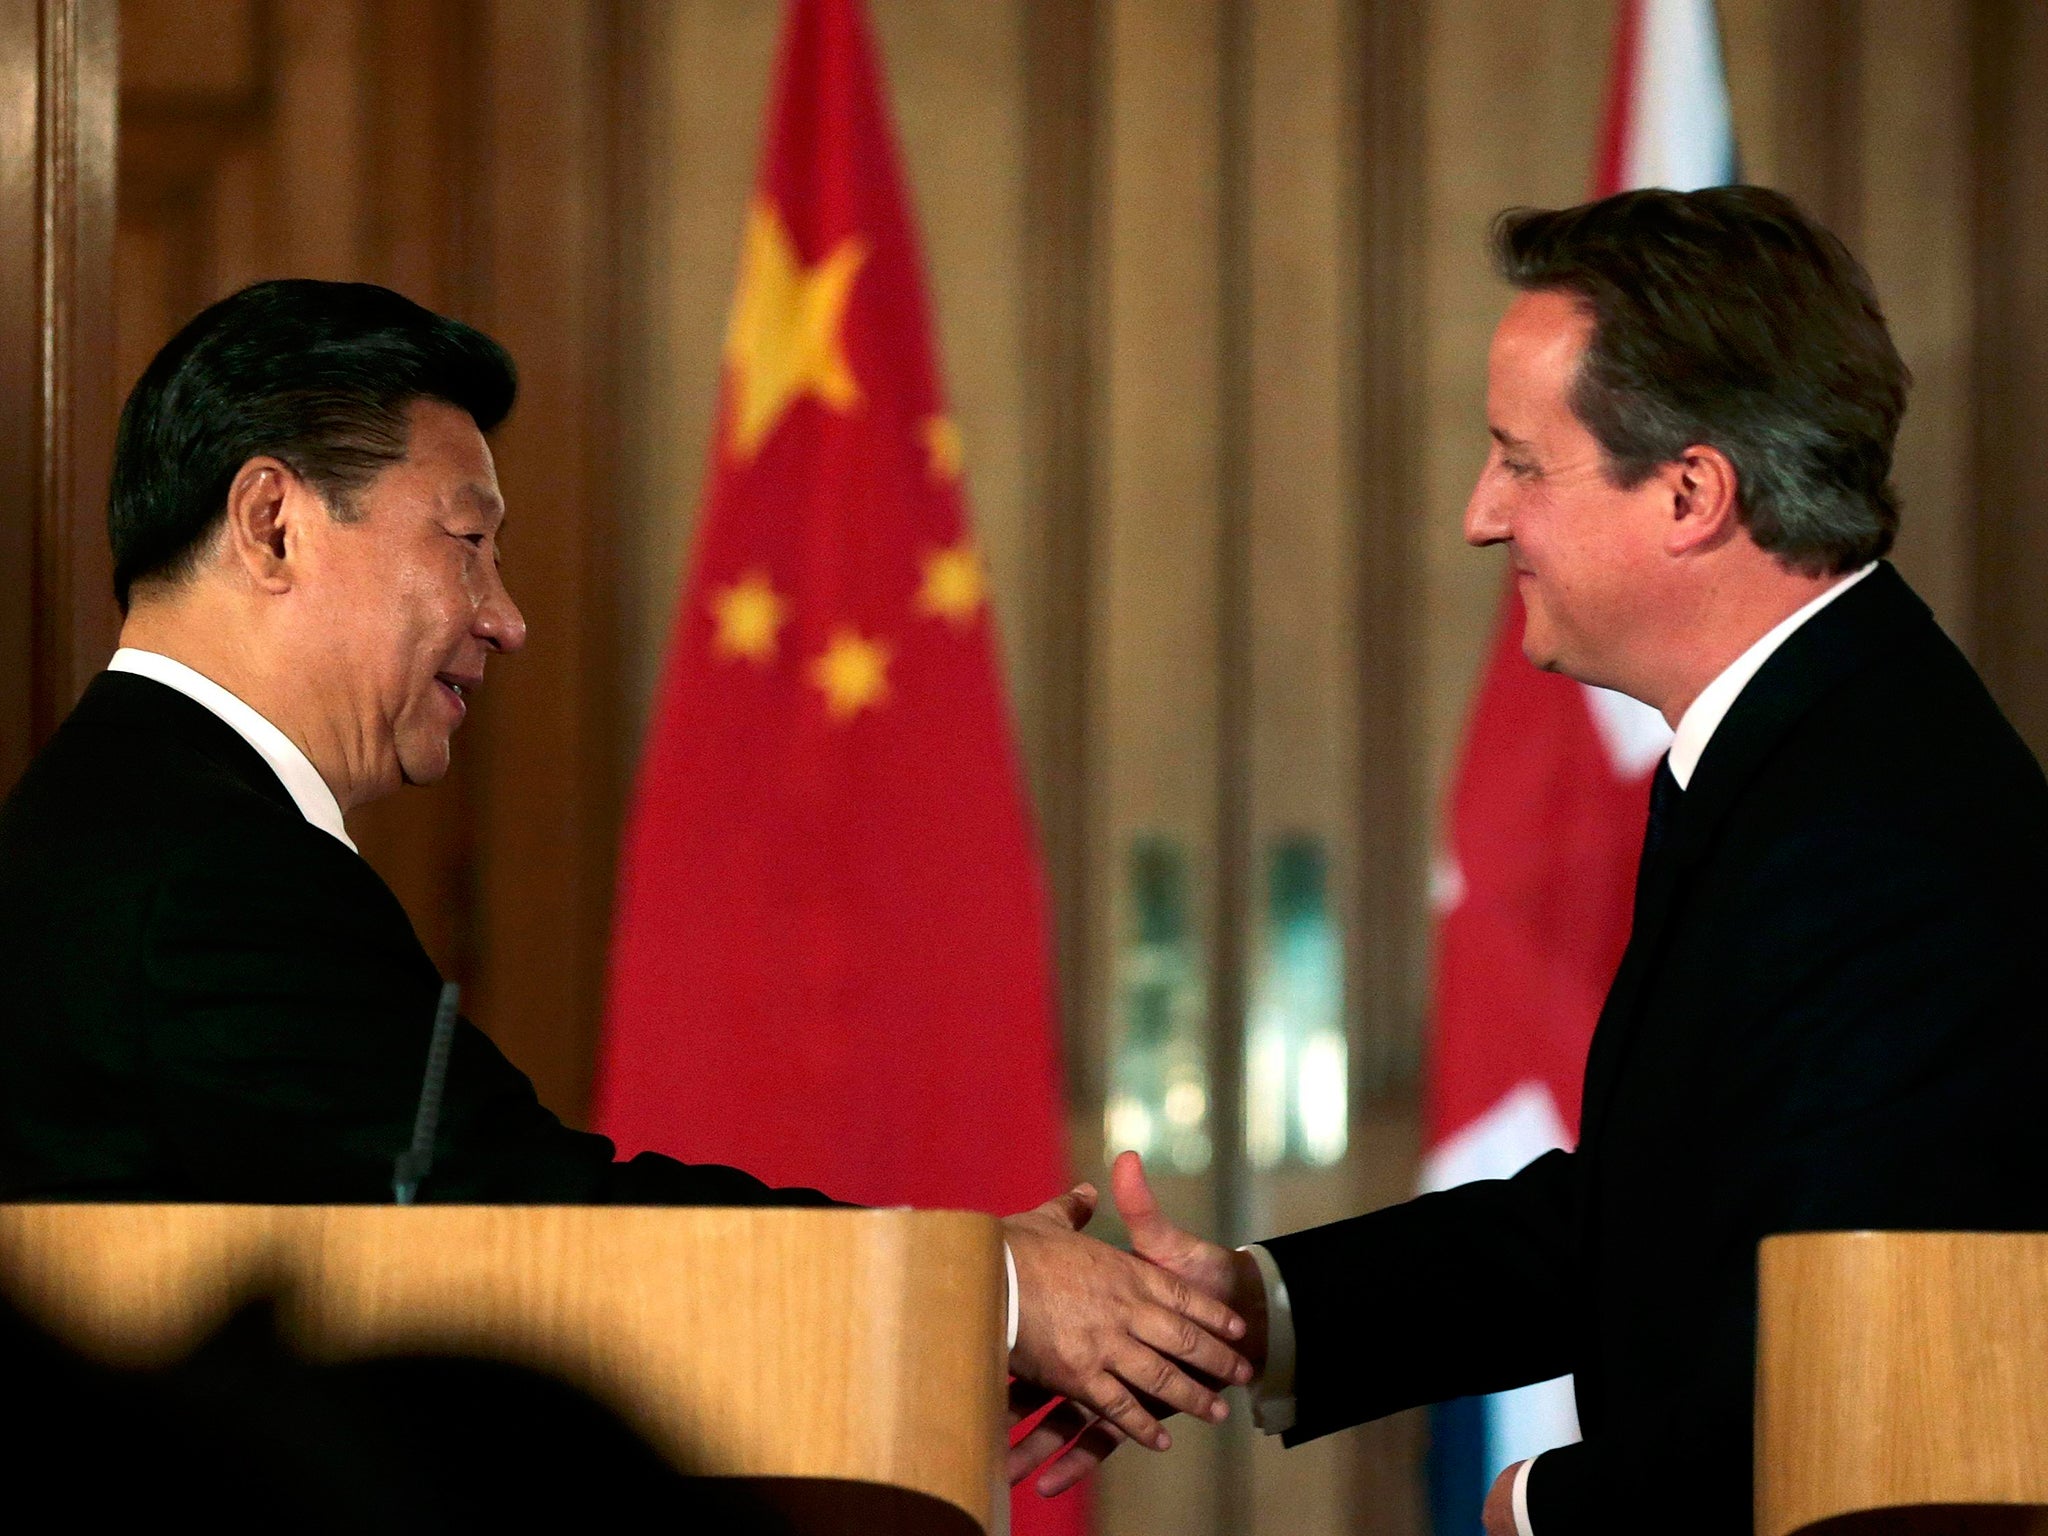 Mr Xi met David Cameron